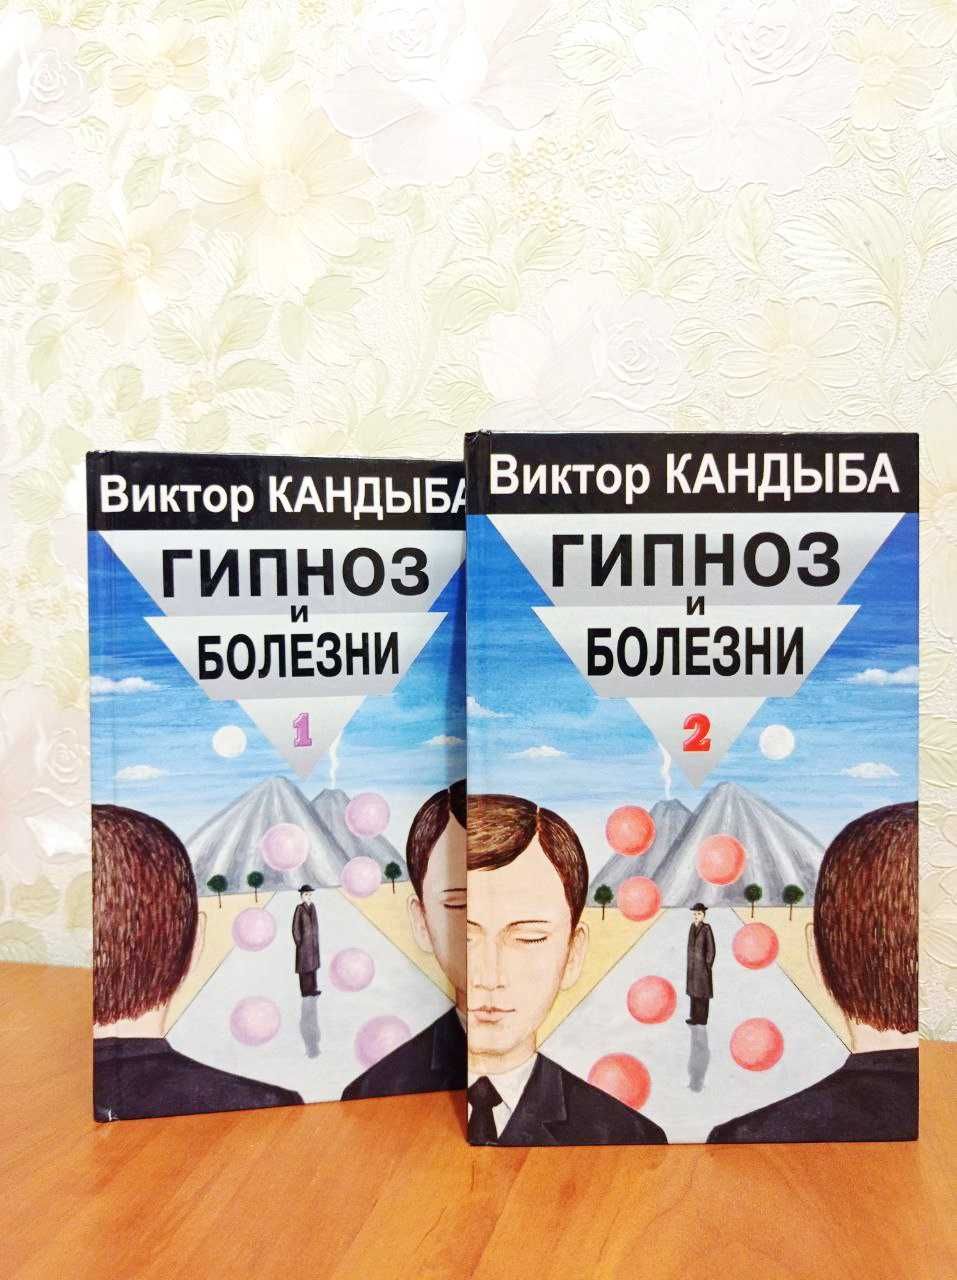 Книга Віктор Кандиба  - Гипноз и болезни  1 том  и 2 том